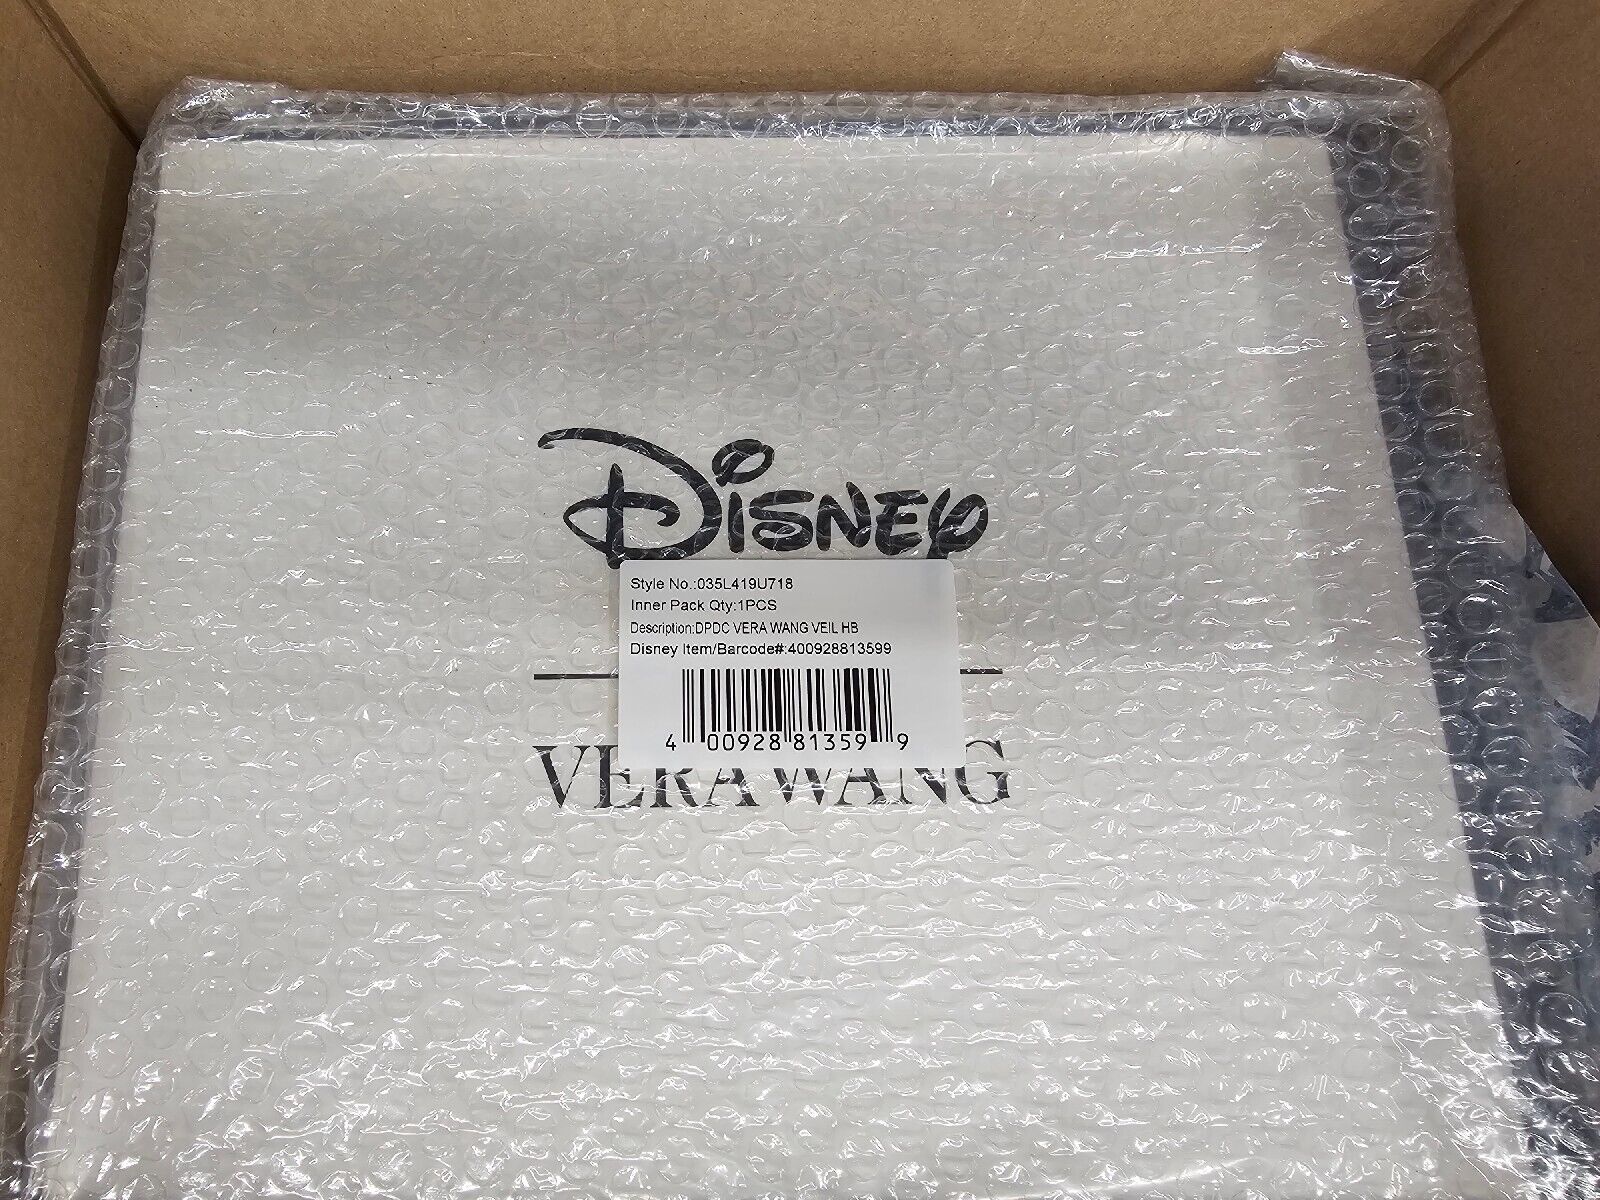 NEW Vera Wang Disney Minnie Mouse Ears Veil Headband Limited Release Wedding